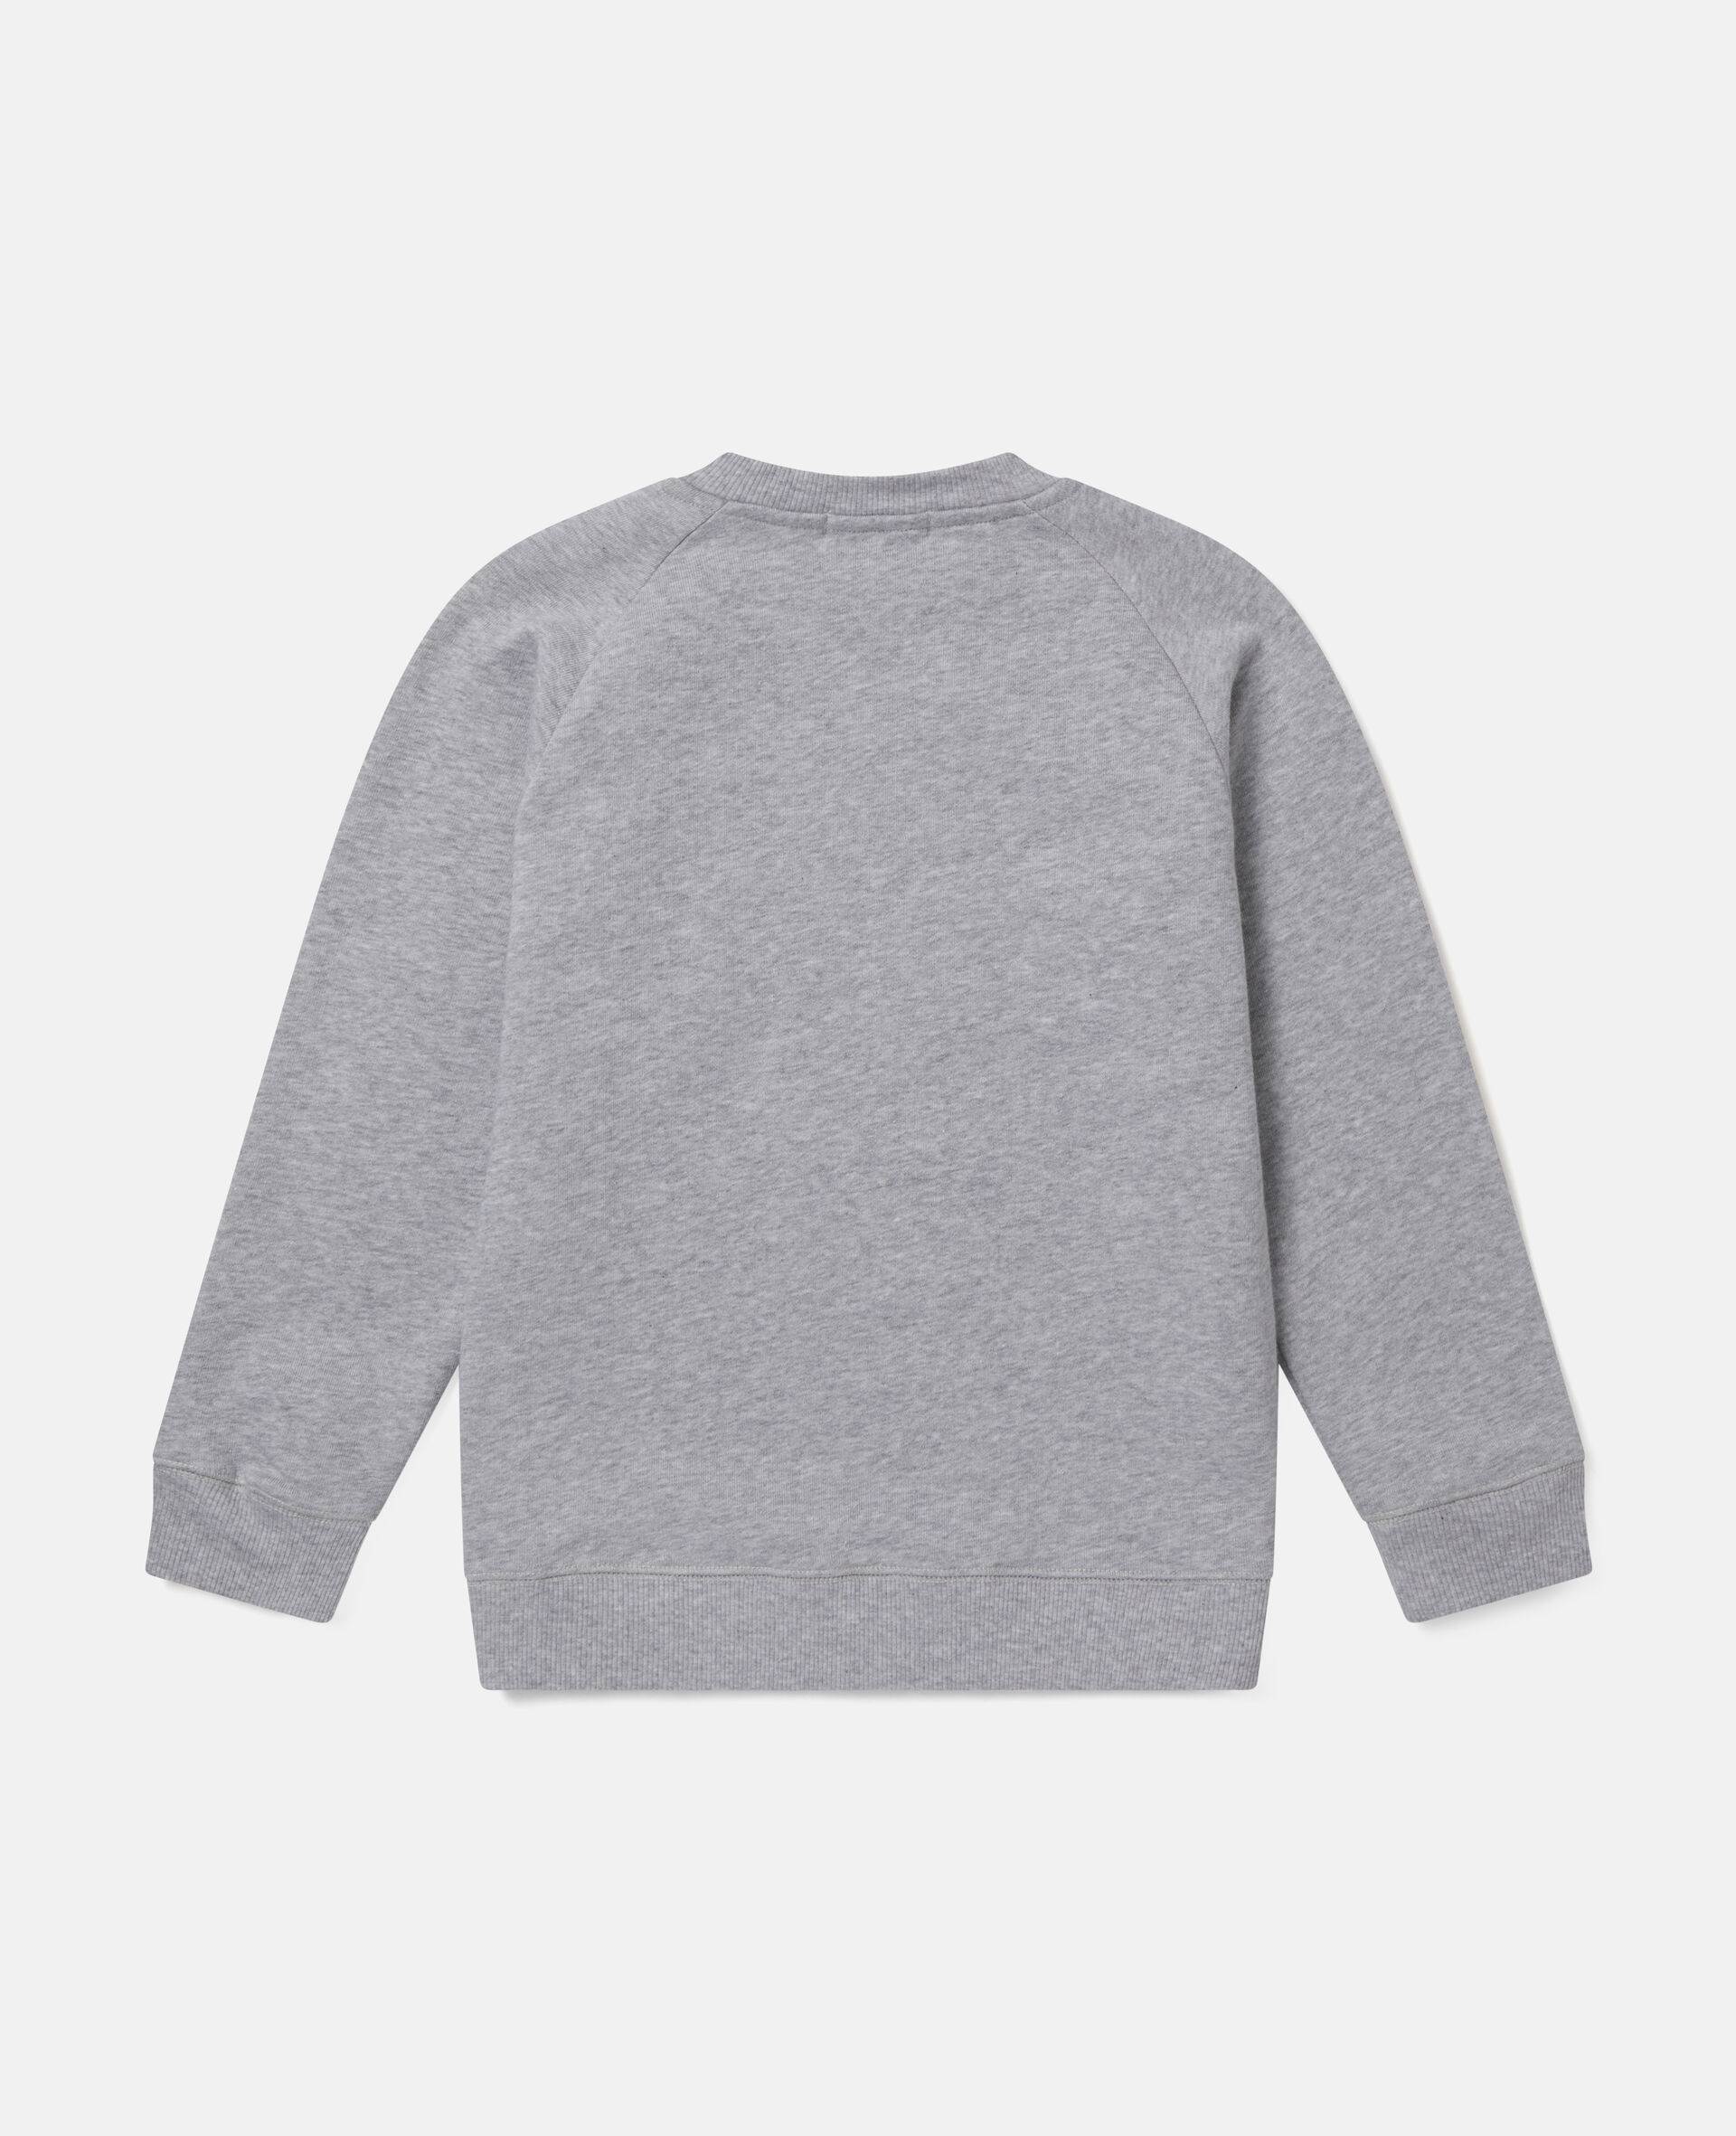 Daisy Heart Cotton Fleece Sweatshirt -Grey-large image number 2